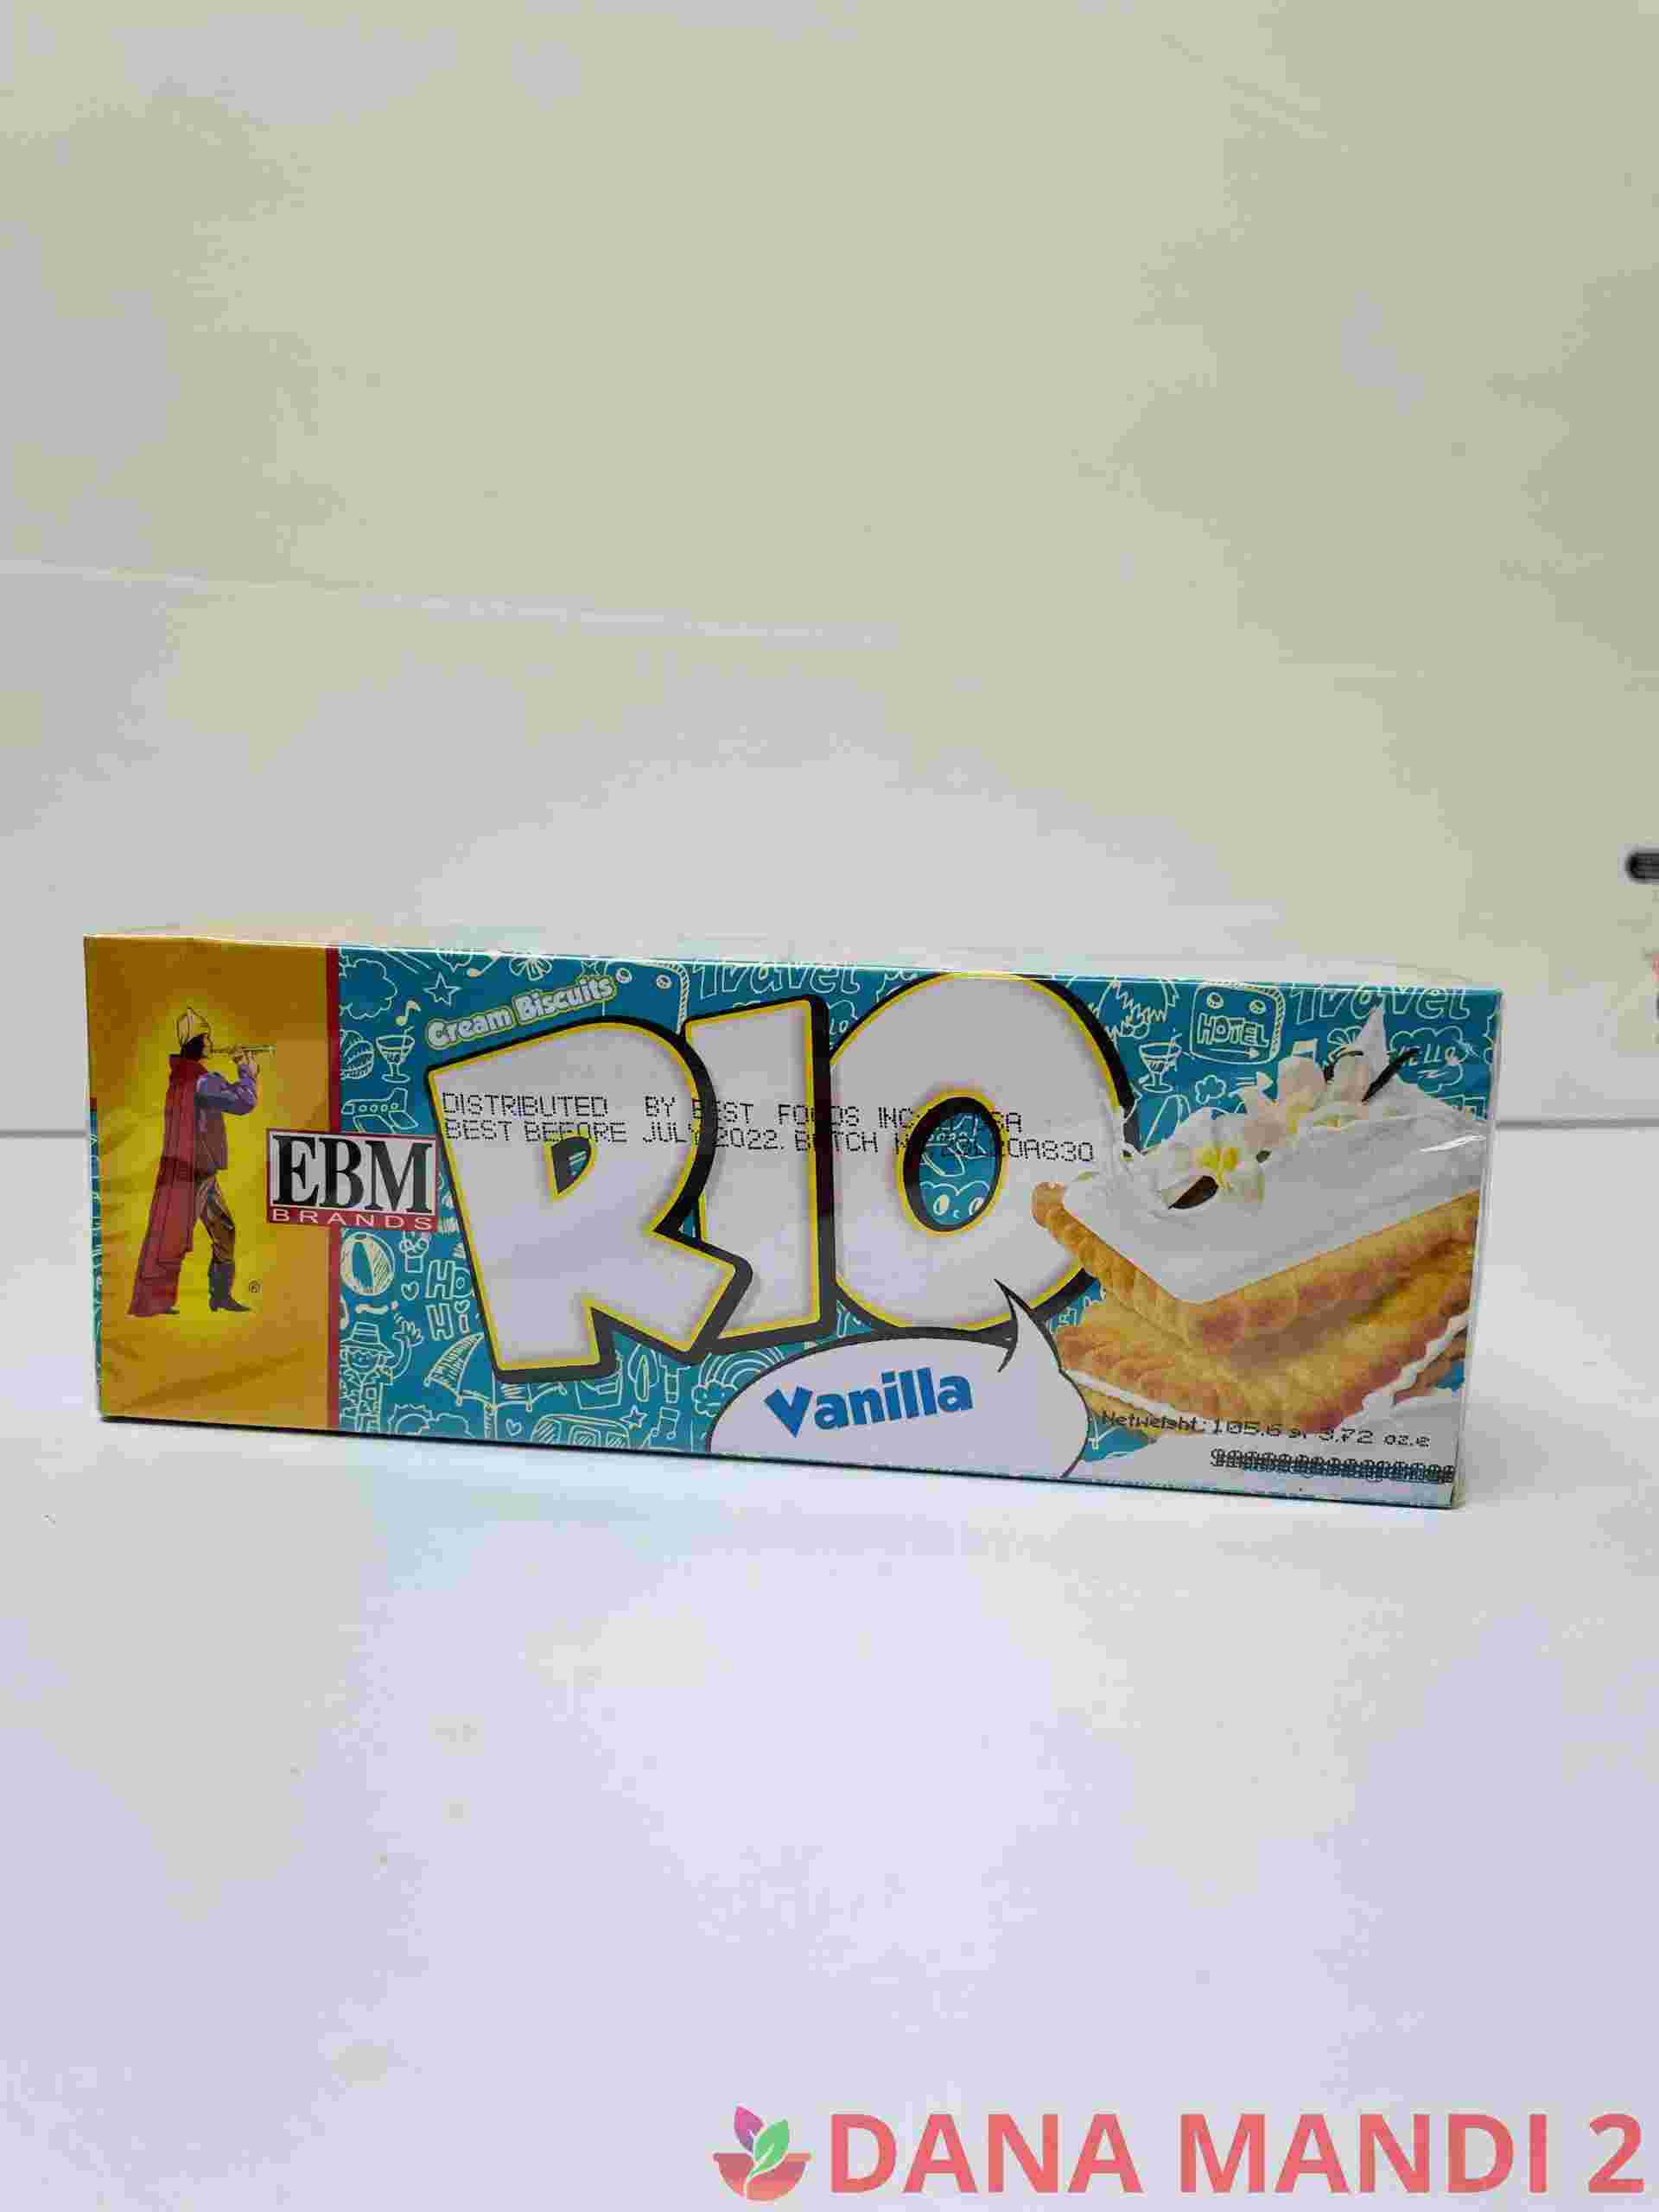 Ebm Rio Vanilla